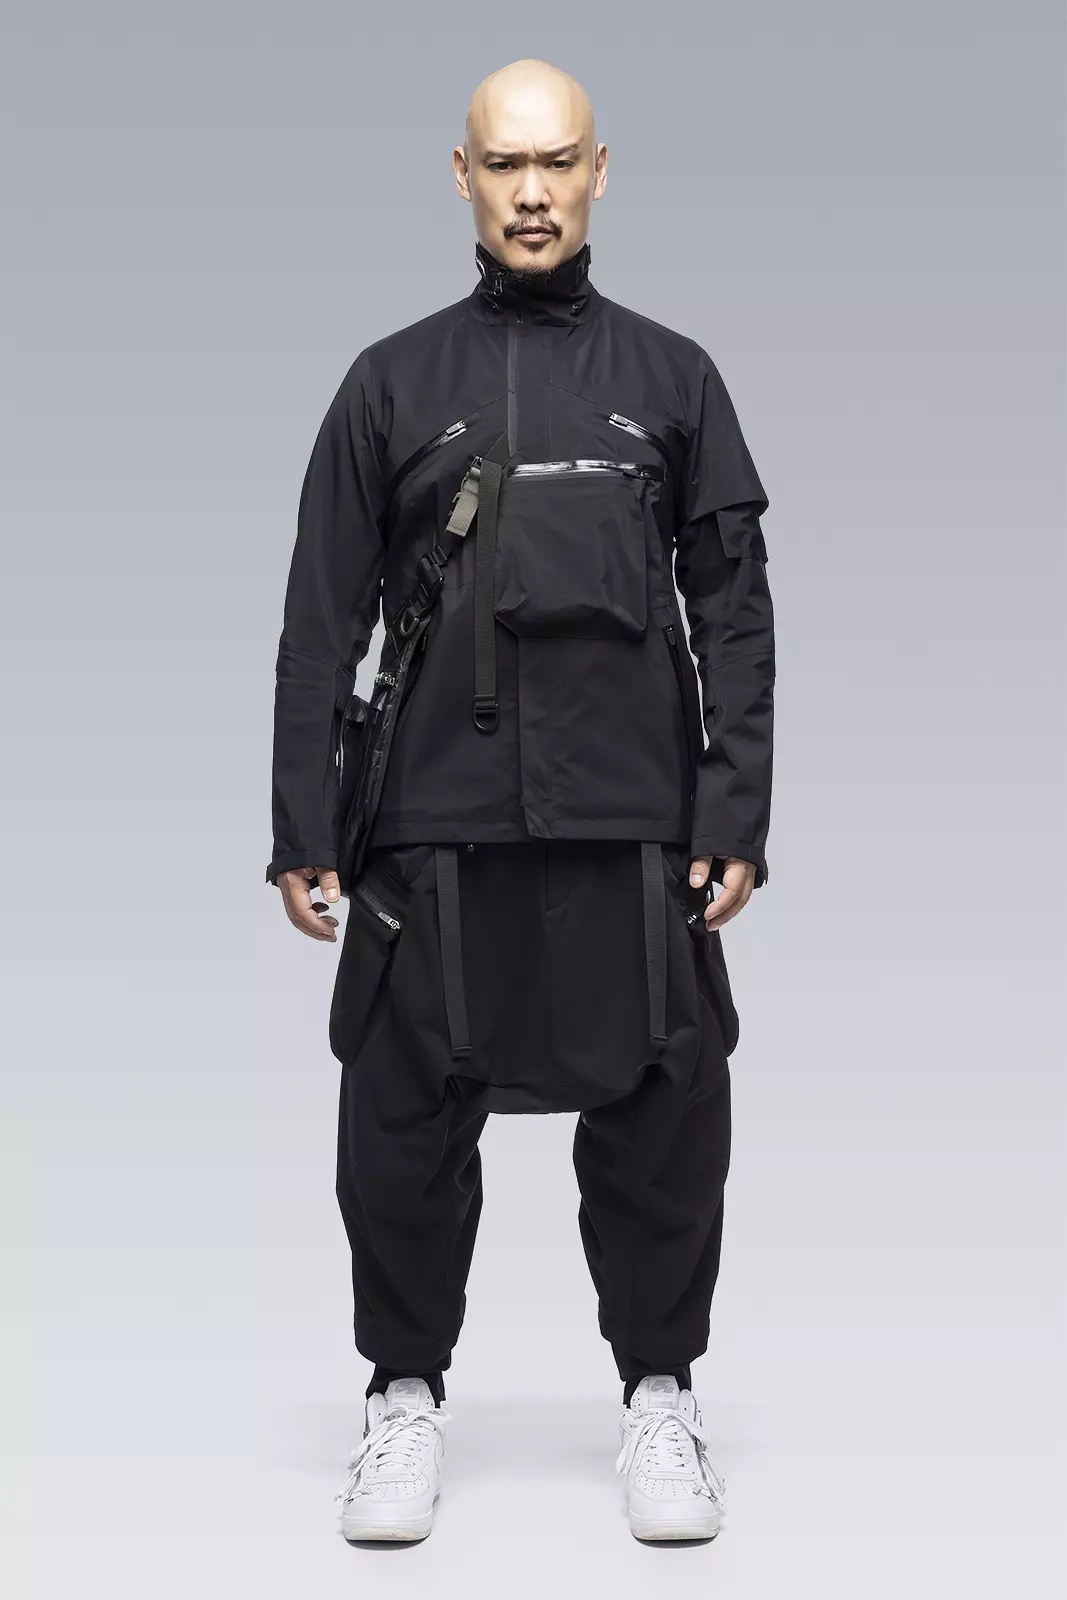 J1A-GTKR-BKS KR EX 3L Gore-Tex® Pro Interops Jacket Black with size 5 WR zippers in gloss black - 36